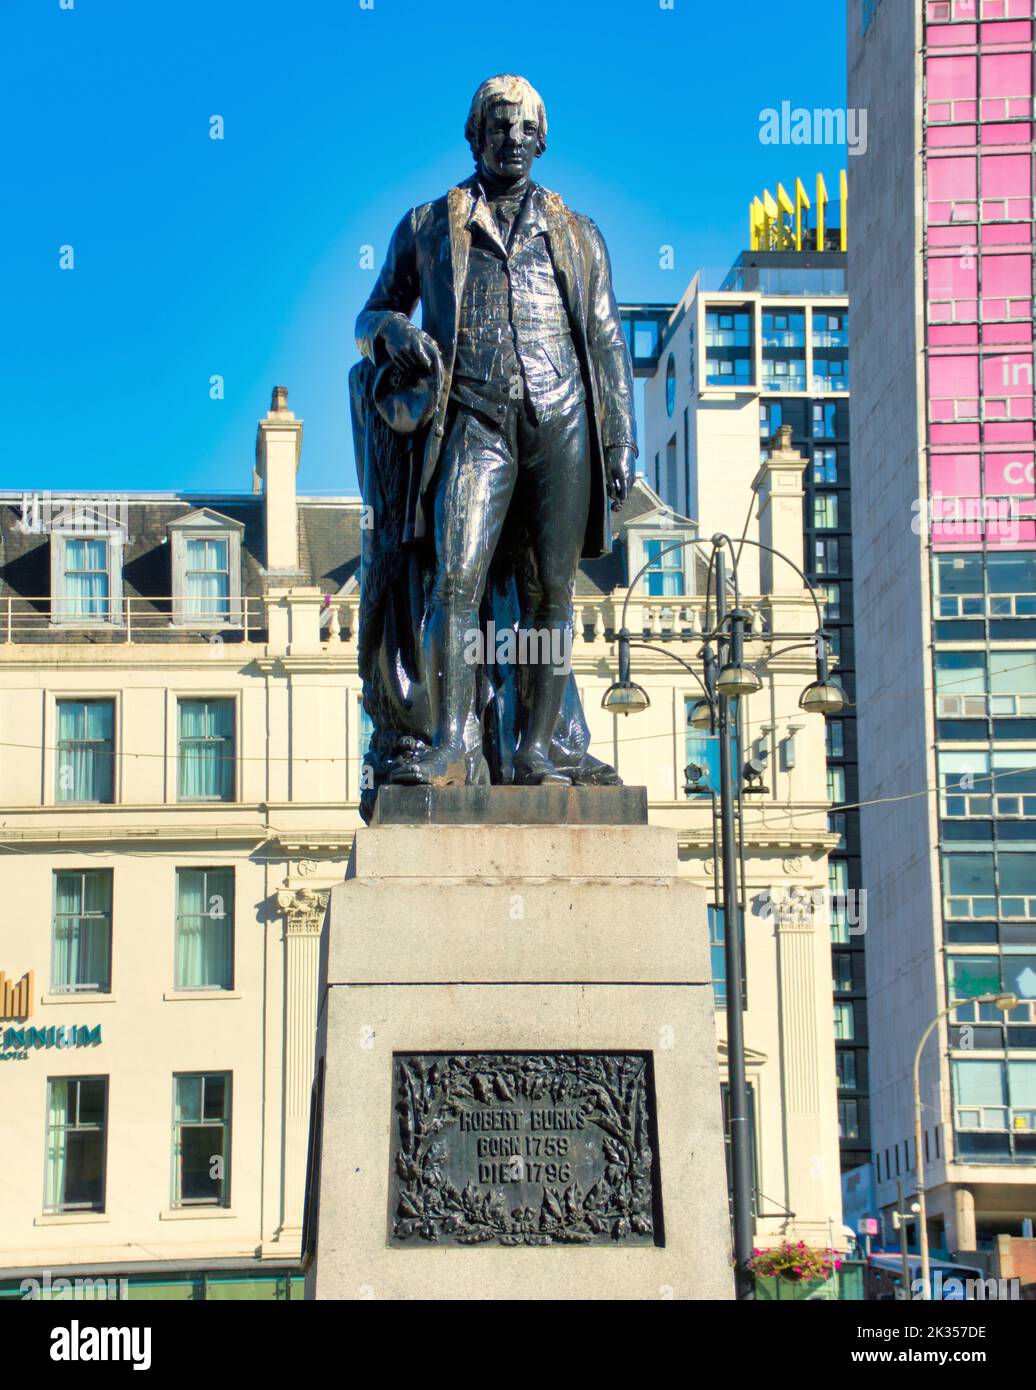 Robert burns statue in George square Glasgow, Scotland, UK Stock Photo